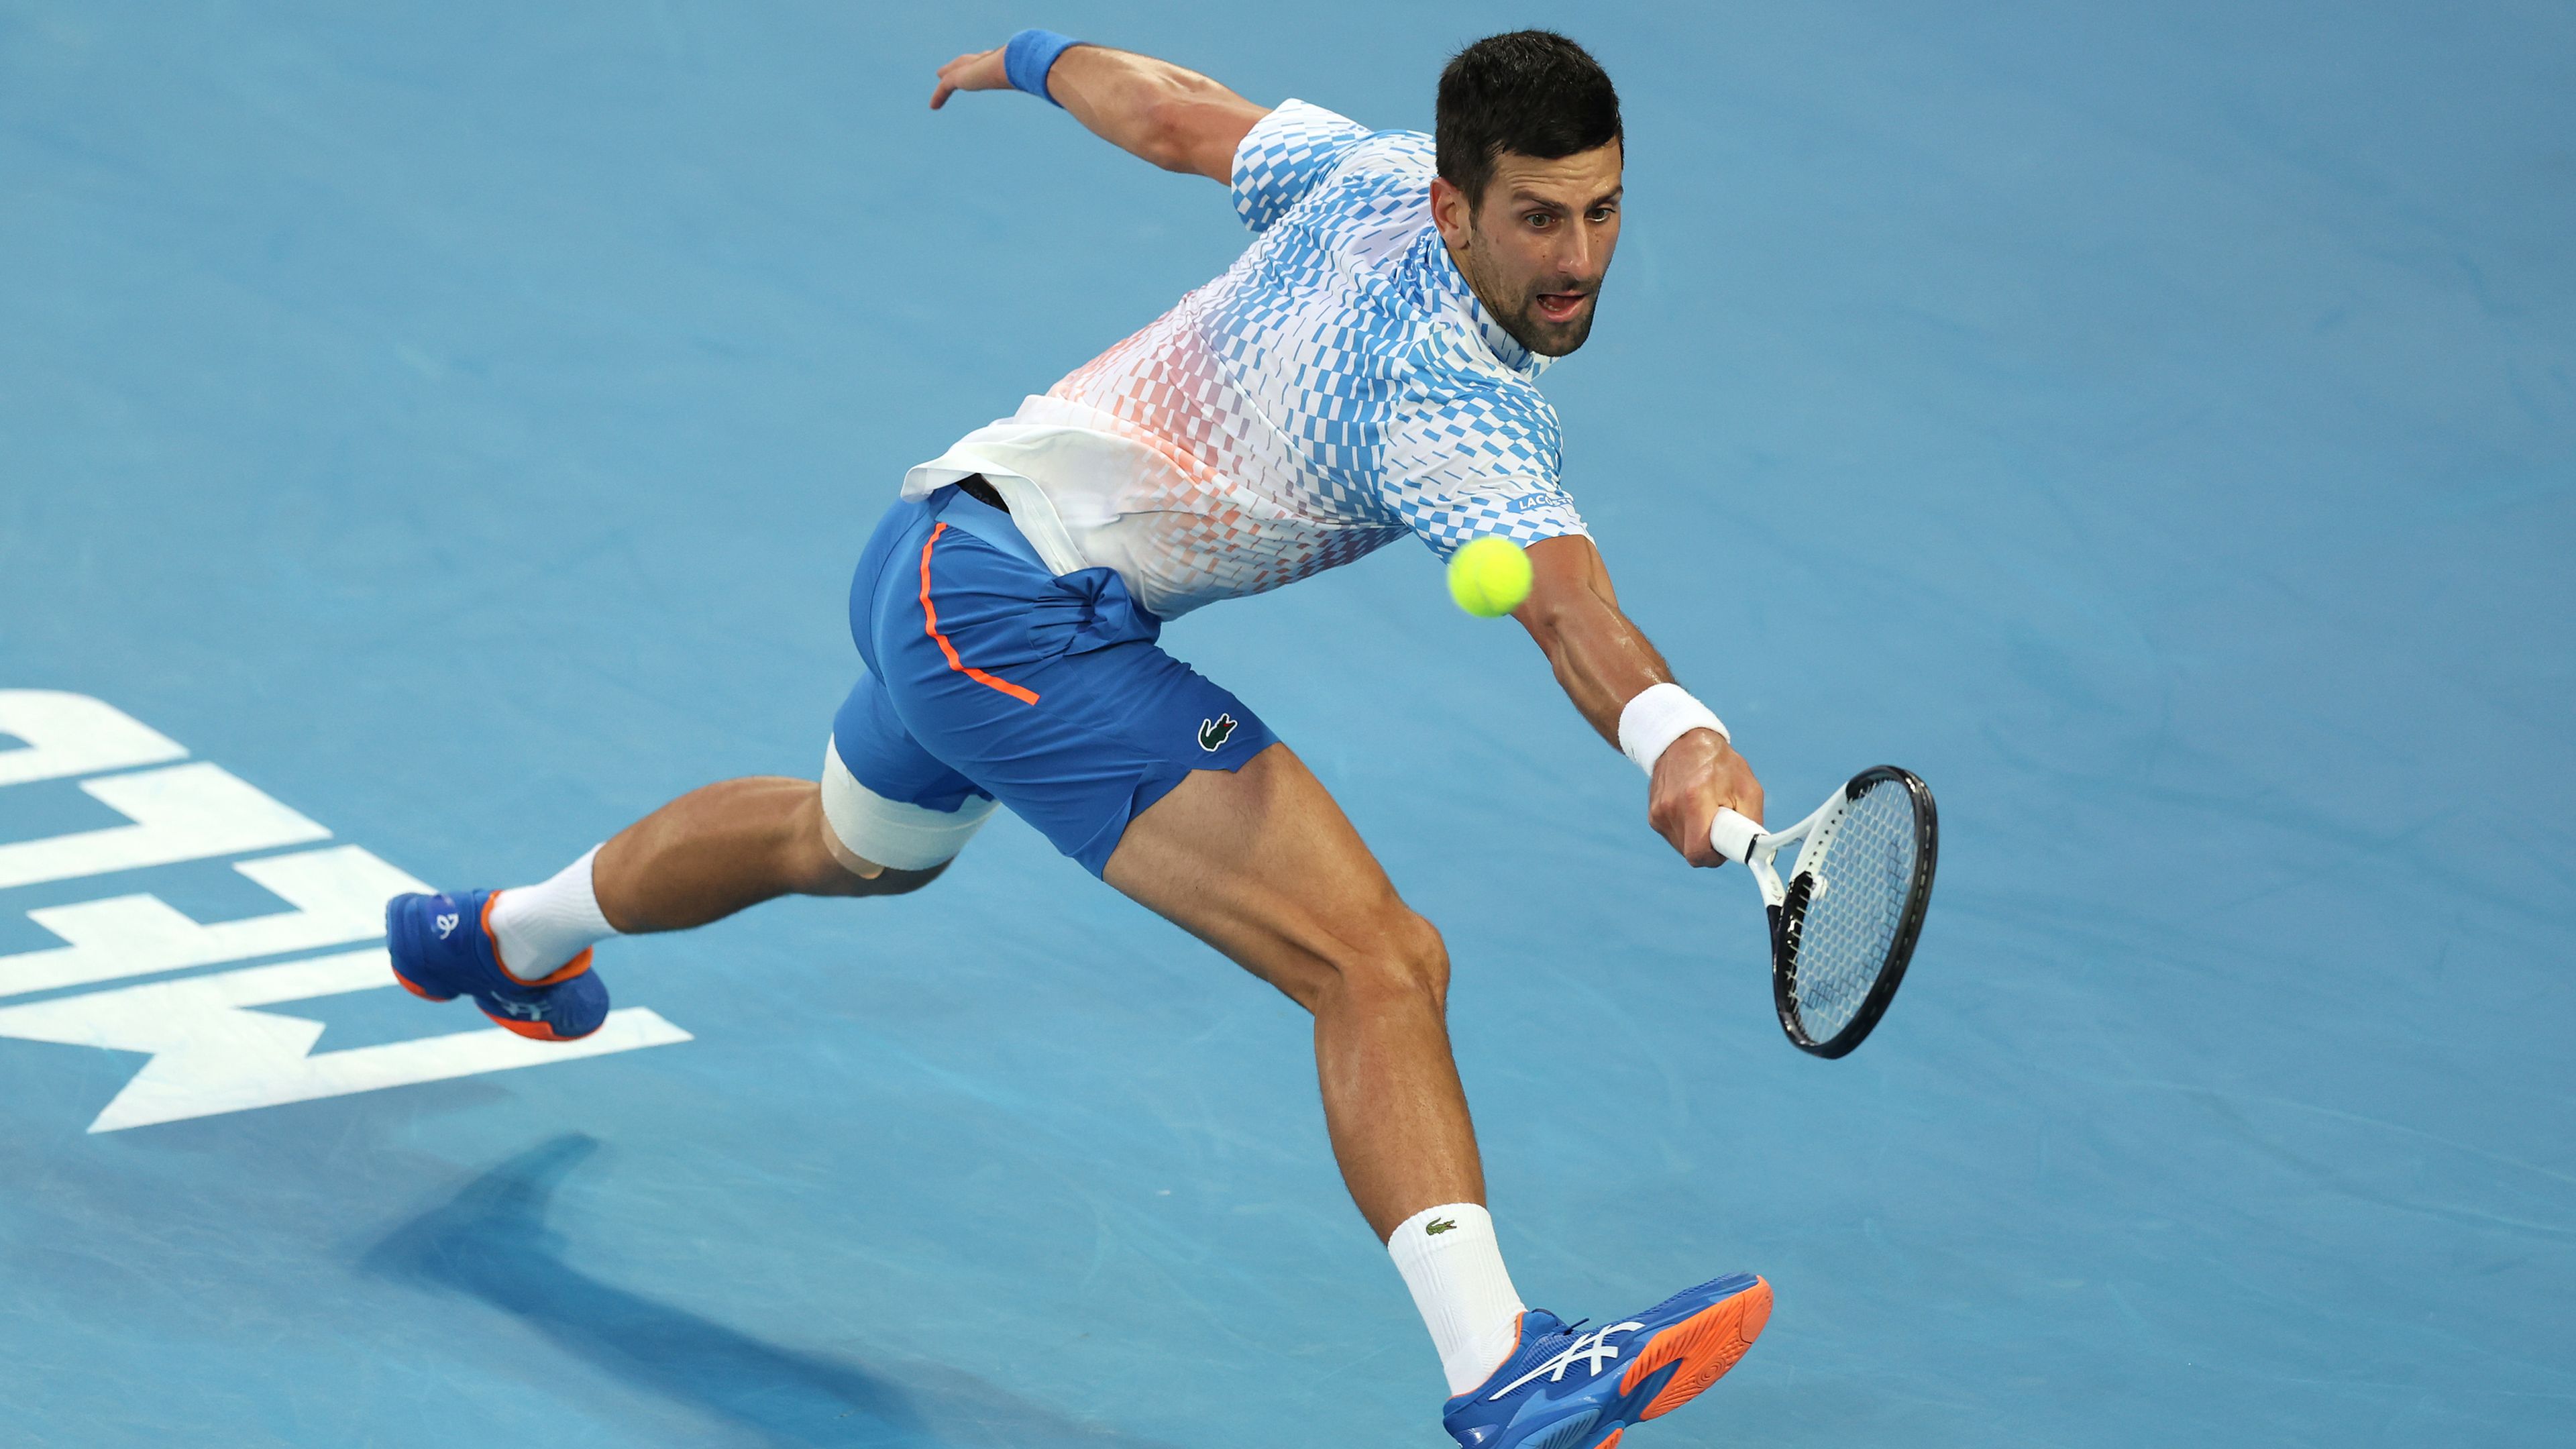 Jim Courier defends Novak Djokovic's hamstring injury amid quarter final dominance